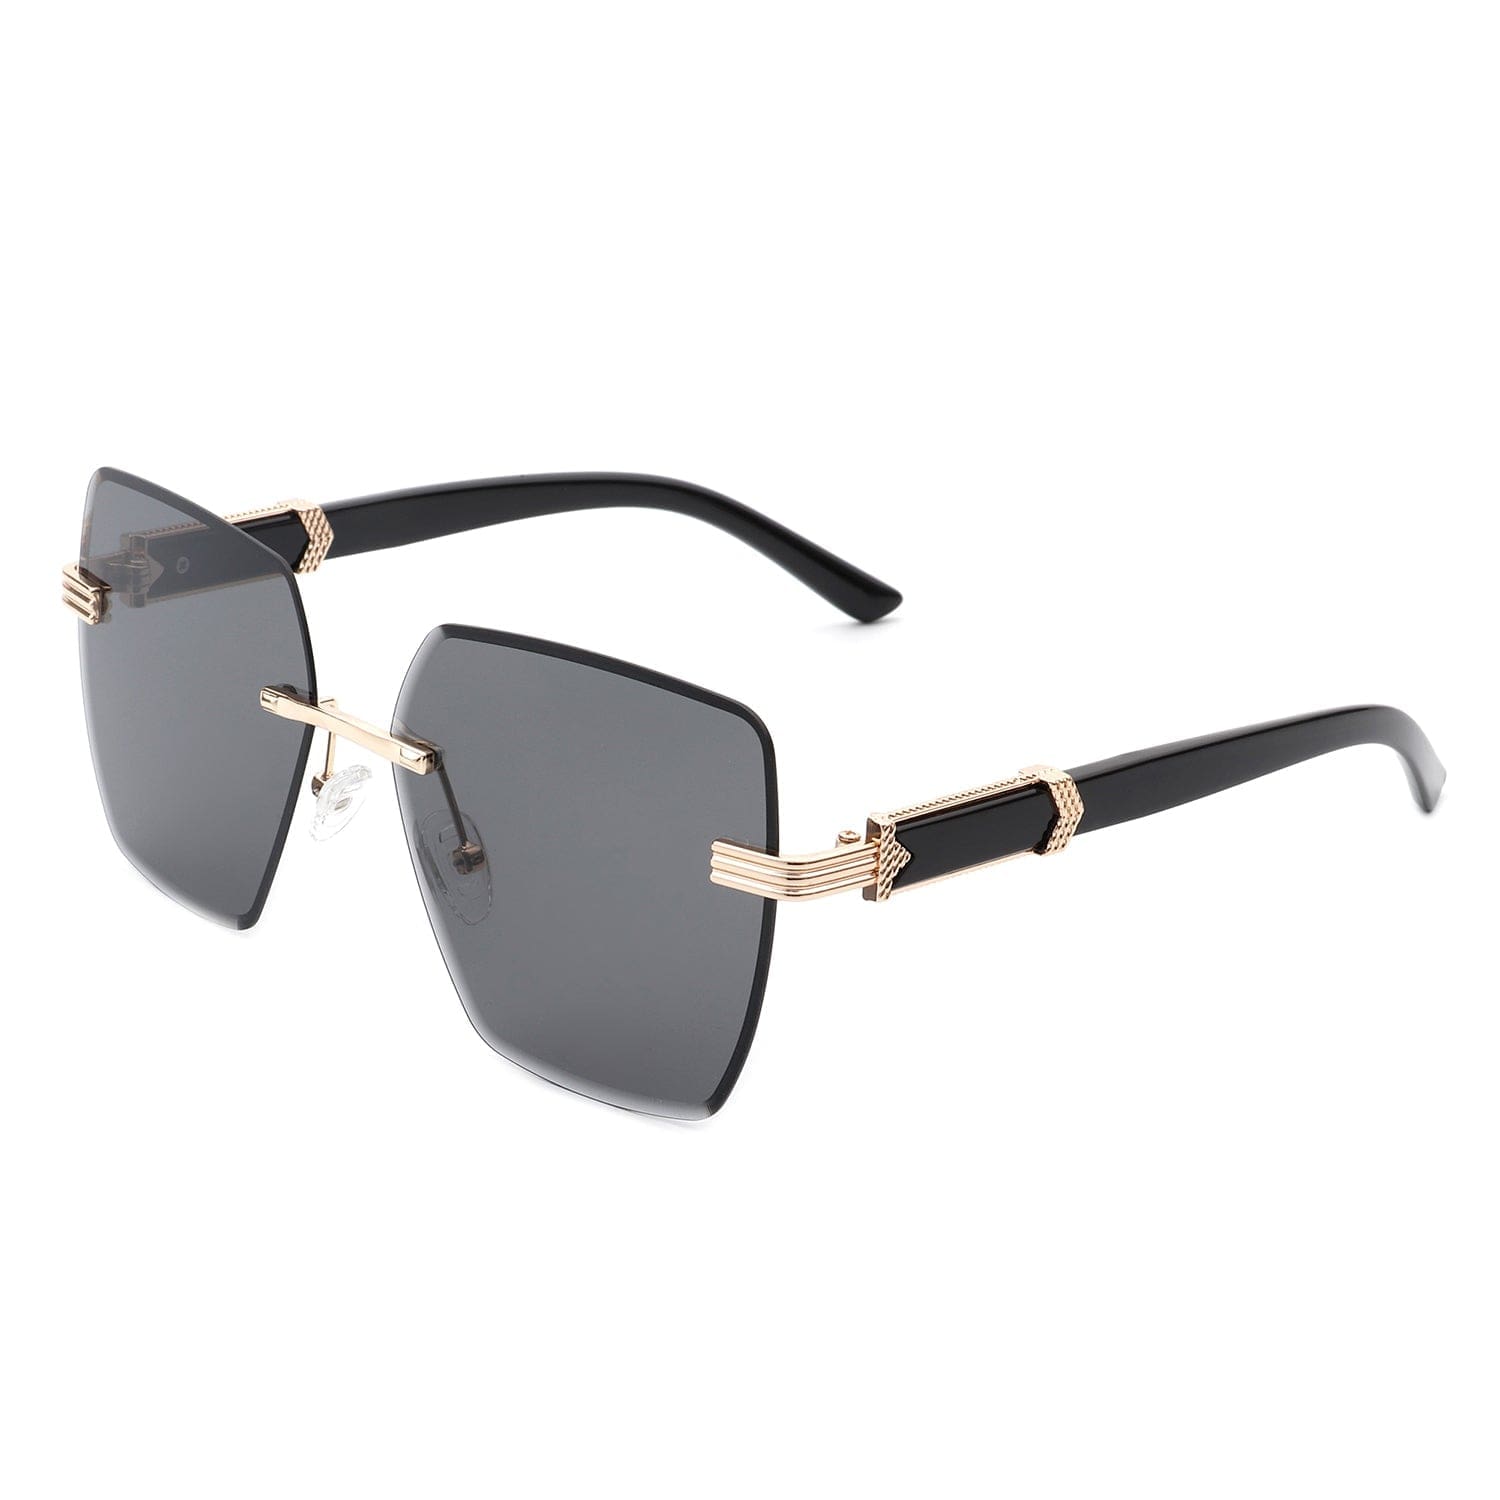 Glimmery - Oversized Rimless Square Sunglasses 2